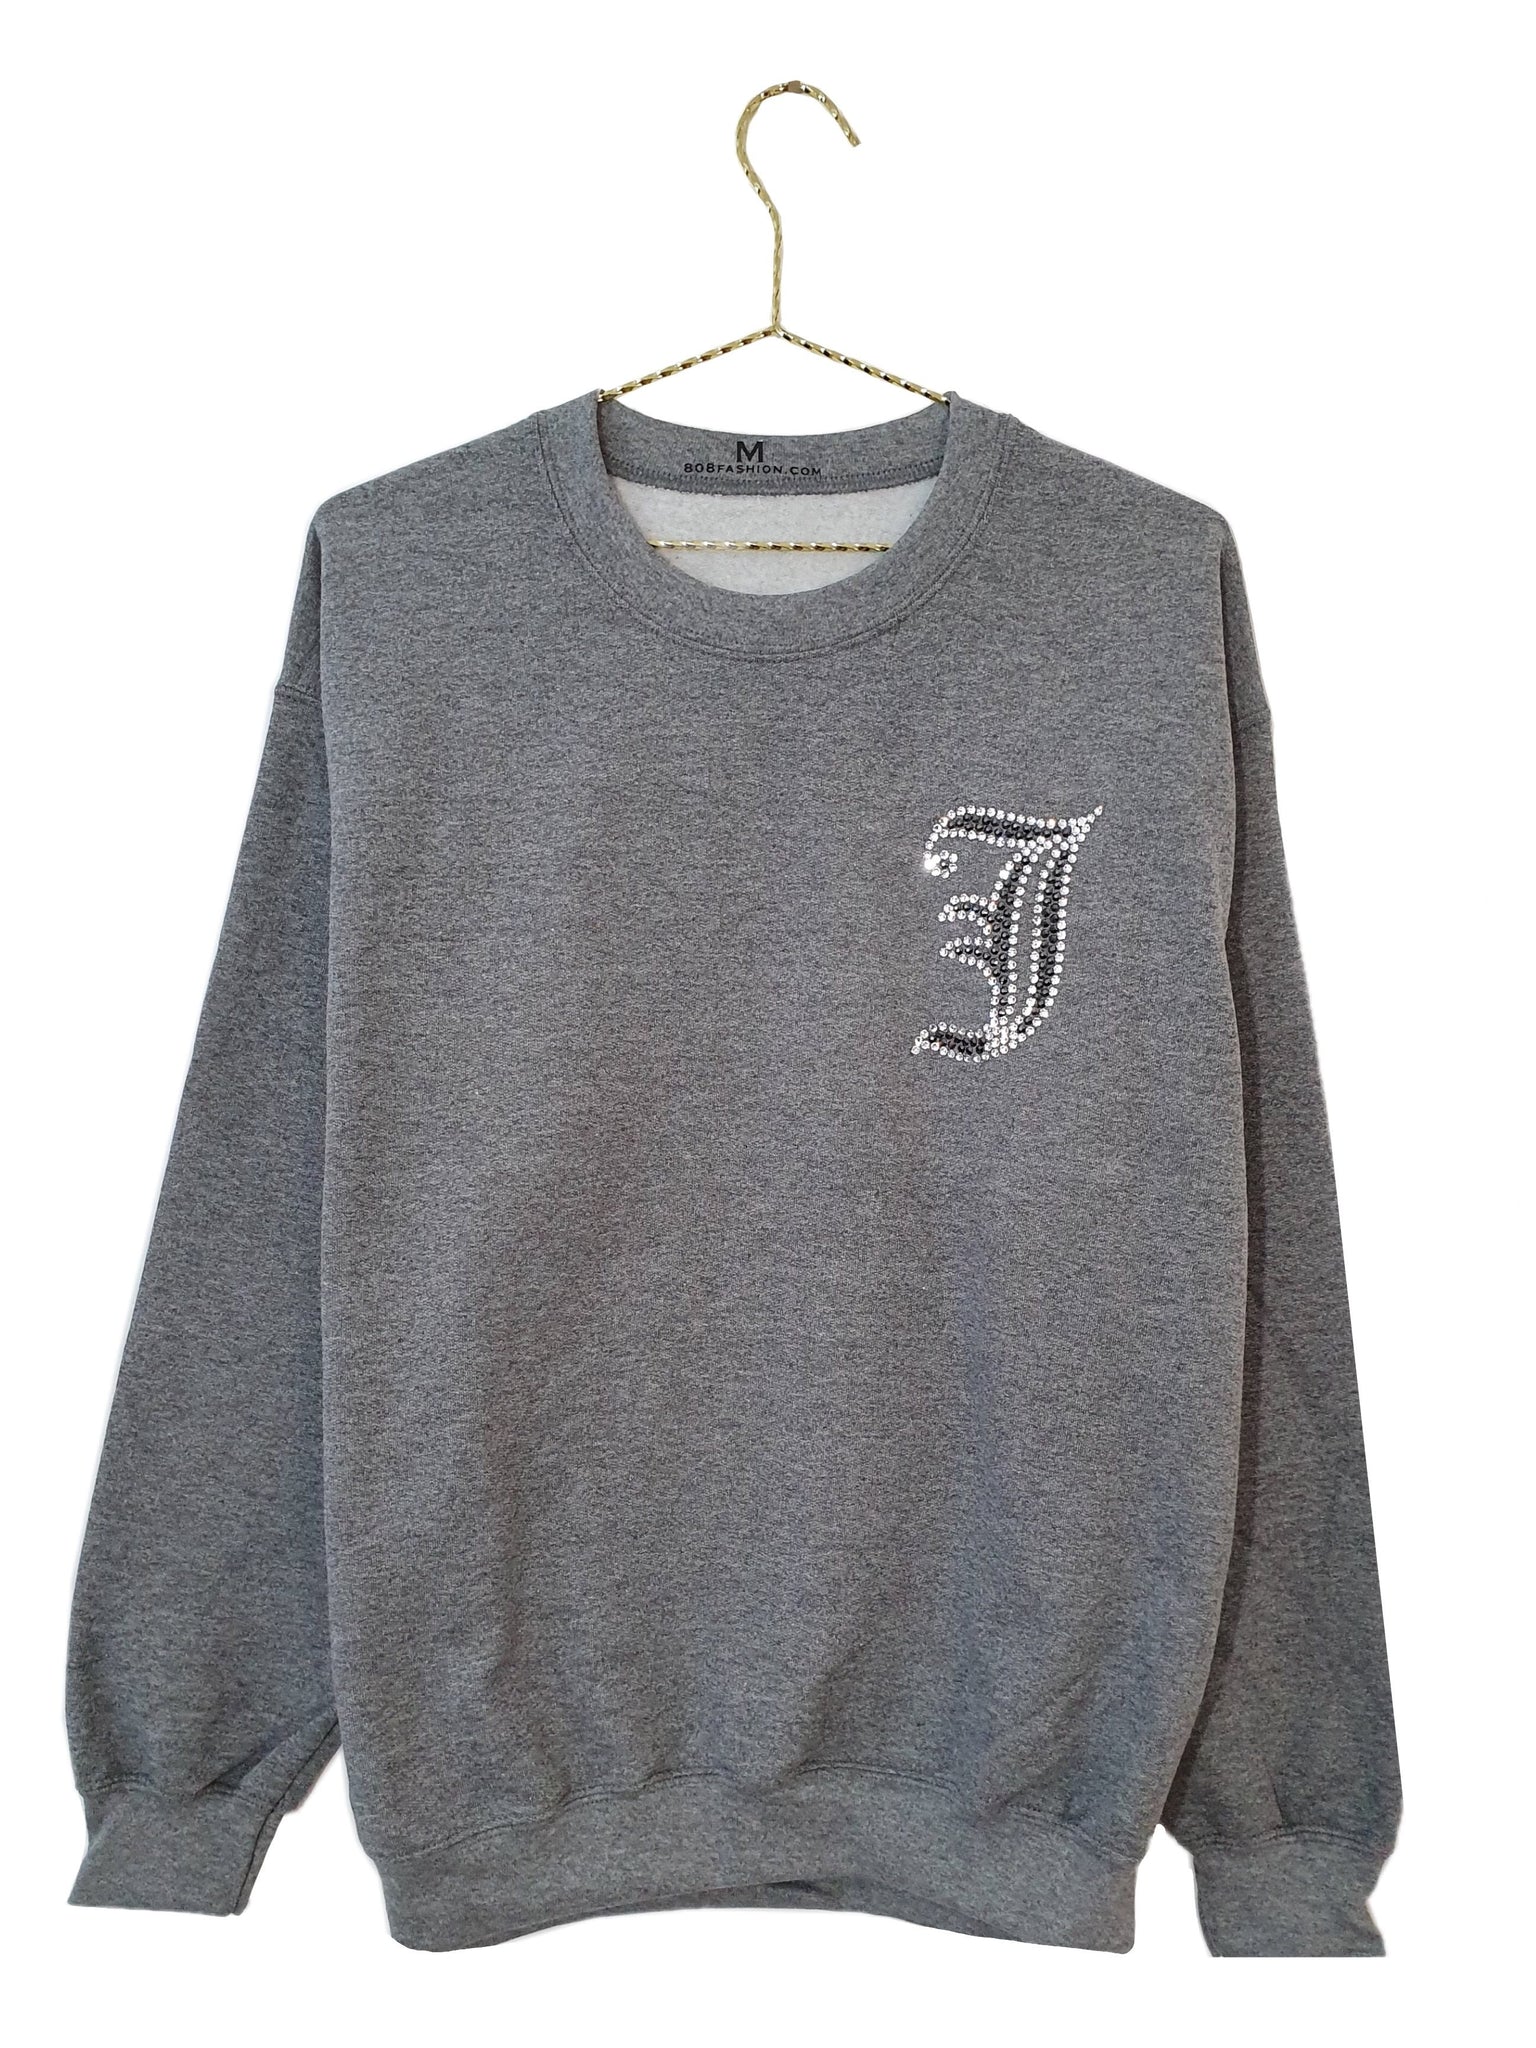 Varsity Customisable Sweatshirt - Insert Your Initial